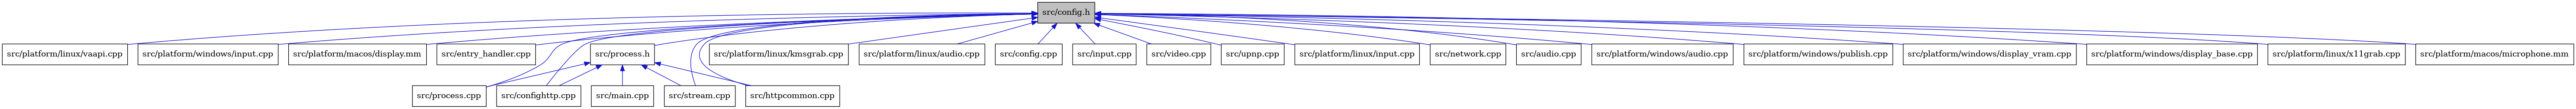 digraph {
    graph [bgcolor="#00000000"]
    node [shape=rectangle style=filled fillcolor="#FFFFFF" font=Helvetica padding=2]
    edge [color="#1414CE"]
    "12" [label="src/platform/linux/vaapi.cpp" tooltip="src/platform/linux/vaapi.cpp"]
    "18" [label="src/platform/windows/input.cpp" tooltip="src/platform/windows/input.cpp"]
    "14" [label="src/platform/macos/display.mm" tooltip="src/platform/macos/display.mm"]
    "5" [label="src/entry_handler.cpp" tooltip="src/entry_handler.cpp"]
    "21" [label="src/process.cpp" tooltip="src/process.cpp"]
    "10" [label="src/platform/linux/kmsgrab.cpp" tooltip="src/platform/linux/kmsgrab.cpp"]
    "9" [label="src/platform/linux/audio.cpp" tooltip="src/platform/linux/audio.cpp"]
    "3" [label="src/config.cpp" tooltip="src/config.cpp"]
    "7" [label="src/input.cpp" tooltip="src/input.cpp"]
    "4" [label="src/confighttp.cpp" tooltip="src/confighttp.cpp"]
    "26" [label="src/video.cpp" tooltip="src/video.cpp"]
    "25" [label="src/upnp.cpp" tooltip="src/upnp.cpp"]
    "11" [label="src/platform/linux/input.cpp" tooltip="src/platform/linux/input.cpp"]
    "24" [label="src/stream.cpp" tooltip="src/stream.cpp"]
    "6" [label="src/httpcommon.cpp" tooltip="src/httpcommon.cpp"]
    "8" [label="src/network.cpp" tooltip="src/network.cpp"]
    "2" [label="src/audio.cpp" tooltip="src/audio.cpp"]
    "16" [label="src/platform/windows/audio.cpp" tooltip="src/platform/windows/audio.cpp"]
    "20" [label="src/platform/windows/publish.cpp" tooltip="src/platform/windows/publish.cpp"]
    "22" [label="src/process.h" tooltip="src/process.h"]
    "1" [label="src/config.h" tooltip="src/config.h" fillcolor="#BFBFBF"]
    "19" [label="src/platform/windows/display_vram.cpp" tooltip="src/platform/windows/display_vram.cpp"]
    "17" [label="src/platform/windows/display_base.cpp" tooltip="src/platform/windows/display_base.cpp"]
    "13" [label="src/platform/linux/x11grab.cpp" tooltip="src/platform/linux/x11grab.cpp"]
    "23" [label="src/main.cpp" tooltip="src/main.cpp"]
    "15" [label="src/platform/macos/microphone.mm" tooltip="src/platform/macos/microphone.mm"]
    "22" -> "4" [dir=back tooltip="include"]
    "22" -> "6" [dir=back tooltip="include"]
    "22" -> "23" [dir=back tooltip="include"]
    "22" -> "21" [dir=back tooltip="include"]
    "22" -> "24" [dir=back tooltip="include"]
    "1" -> "2" [dir=back tooltip="include"]
    "1" -> "3" [dir=back tooltip="include"]
    "1" -> "4" [dir=back tooltip="include"]
    "1" -> "5" [dir=back tooltip="include"]
    "1" -> "6" [dir=back tooltip="include"]
    "1" -> "7" [dir=back tooltip="include"]
    "1" -> "8" [dir=back tooltip="include"]
    "1" -> "9" [dir=back tooltip="include"]
    "1" -> "10" [dir=back tooltip="include"]
    "1" -> "11" [dir=back tooltip="include"]
    "1" -> "12" [dir=back tooltip="include"]
    "1" -> "13" [dir=back tooltip="include"]
    "1" -> "14" [dir=back tooltip="include"]
    "1" -> "15" [dir=back tooltip="include"]
    "1" -> "16" [dir=back tooltip="include"]
    "1" -> "17" [dir=back tooltip="include"]
    "1" -> "18" [dir=back tooltip="include"]
    "1" -> "19" [dir=back tooltip="include"]
    "1" -> "20" [dir=back tooltip="include"]
    "1" -> "21" [dir=back tooltip="include"]
    "1" -> "22" [dir=back tooltip="include"]
    "1" -> "24" [dir=back tooltip="include"]
    "1" -> "25" [dir=back tooltip="include"]
    "1" -> "26" [dir=back tooltip="include"]
}